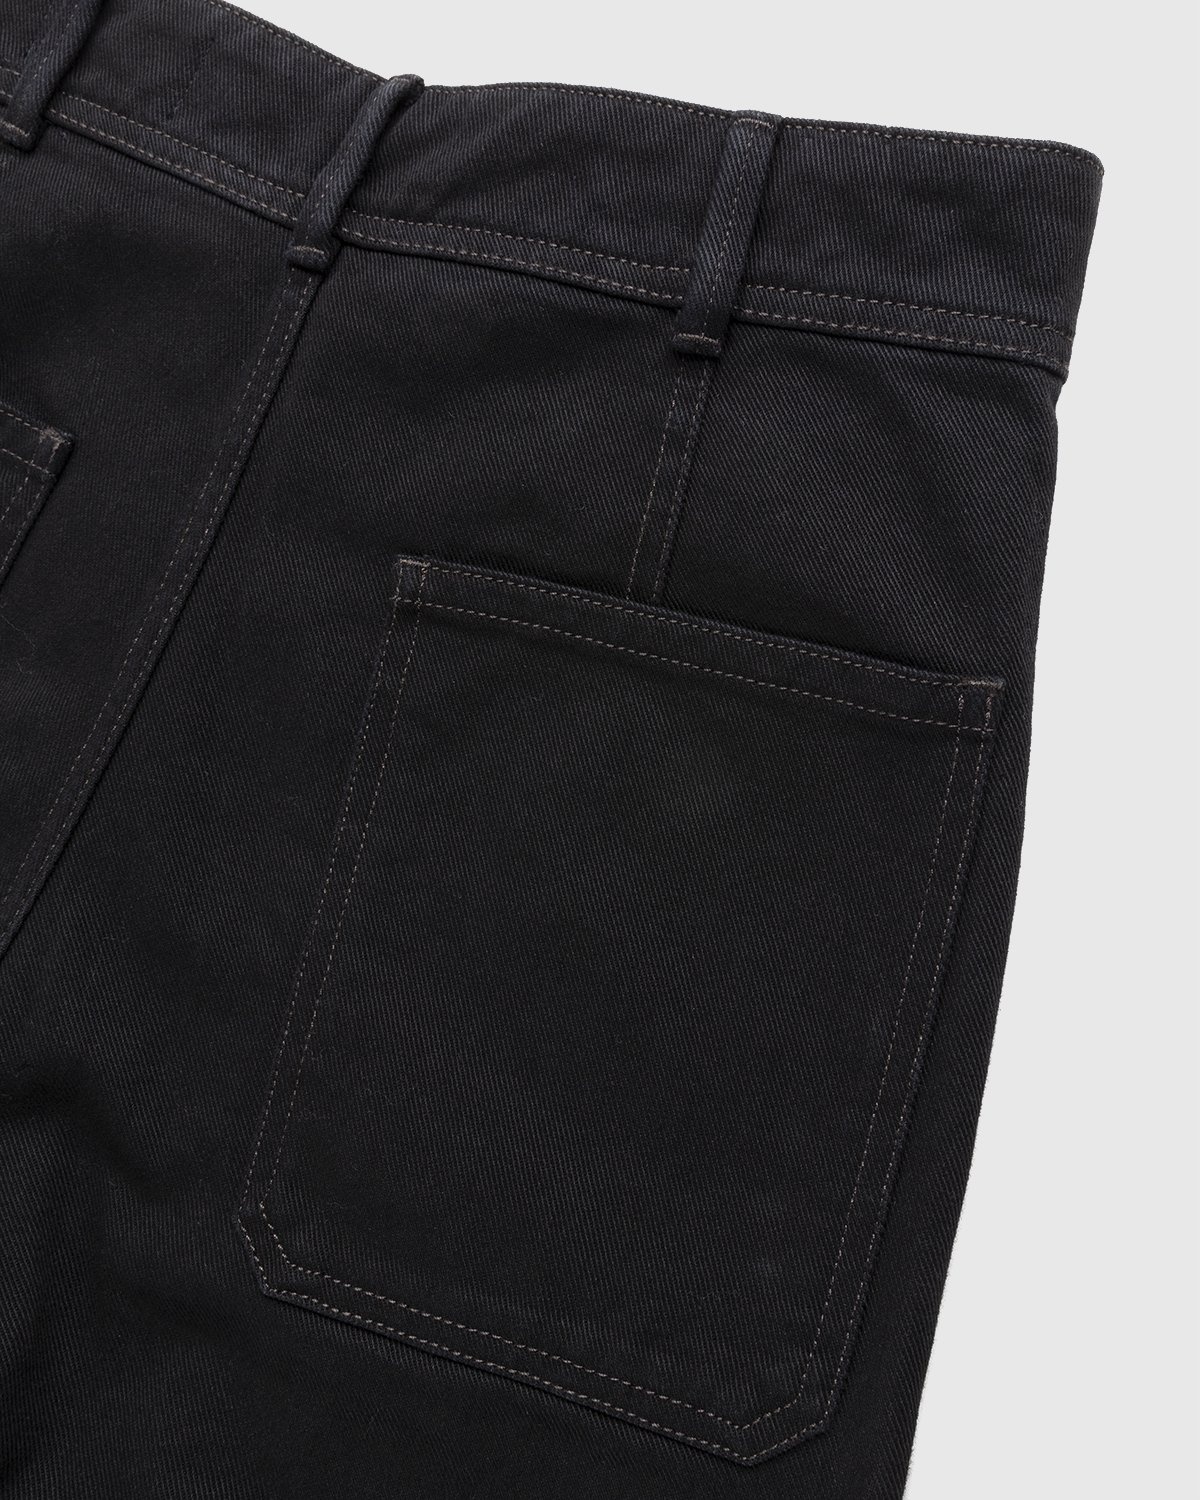 Lemaire Denim Sailor Pants - Black on Garmentory